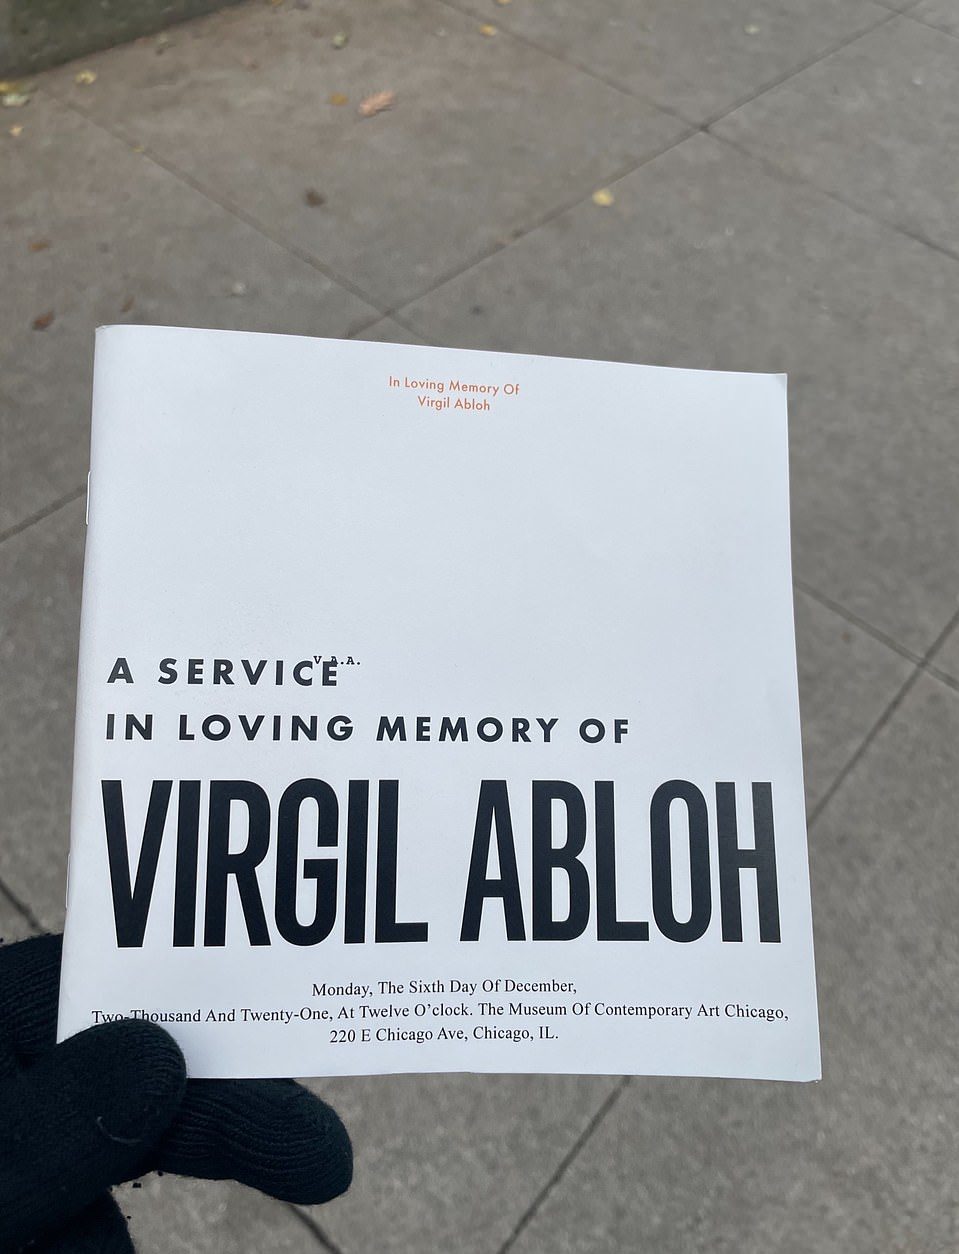 A eulogy for Virgil Abloh